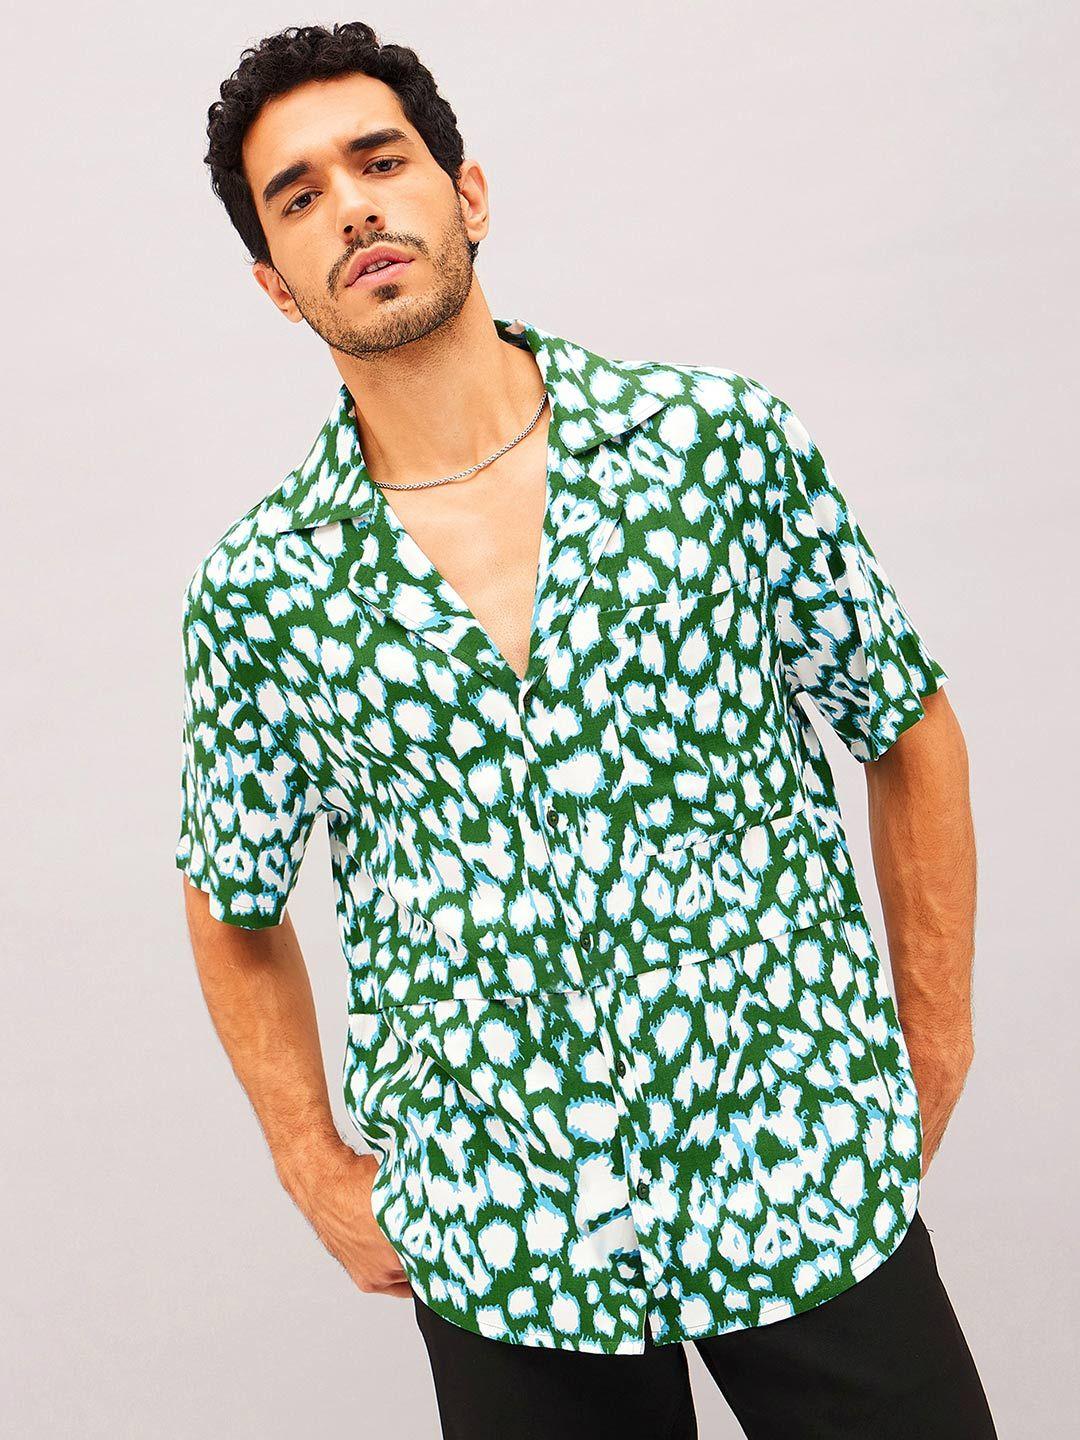 mascln sassafras men green relaxed animal opaque printed casual shirt